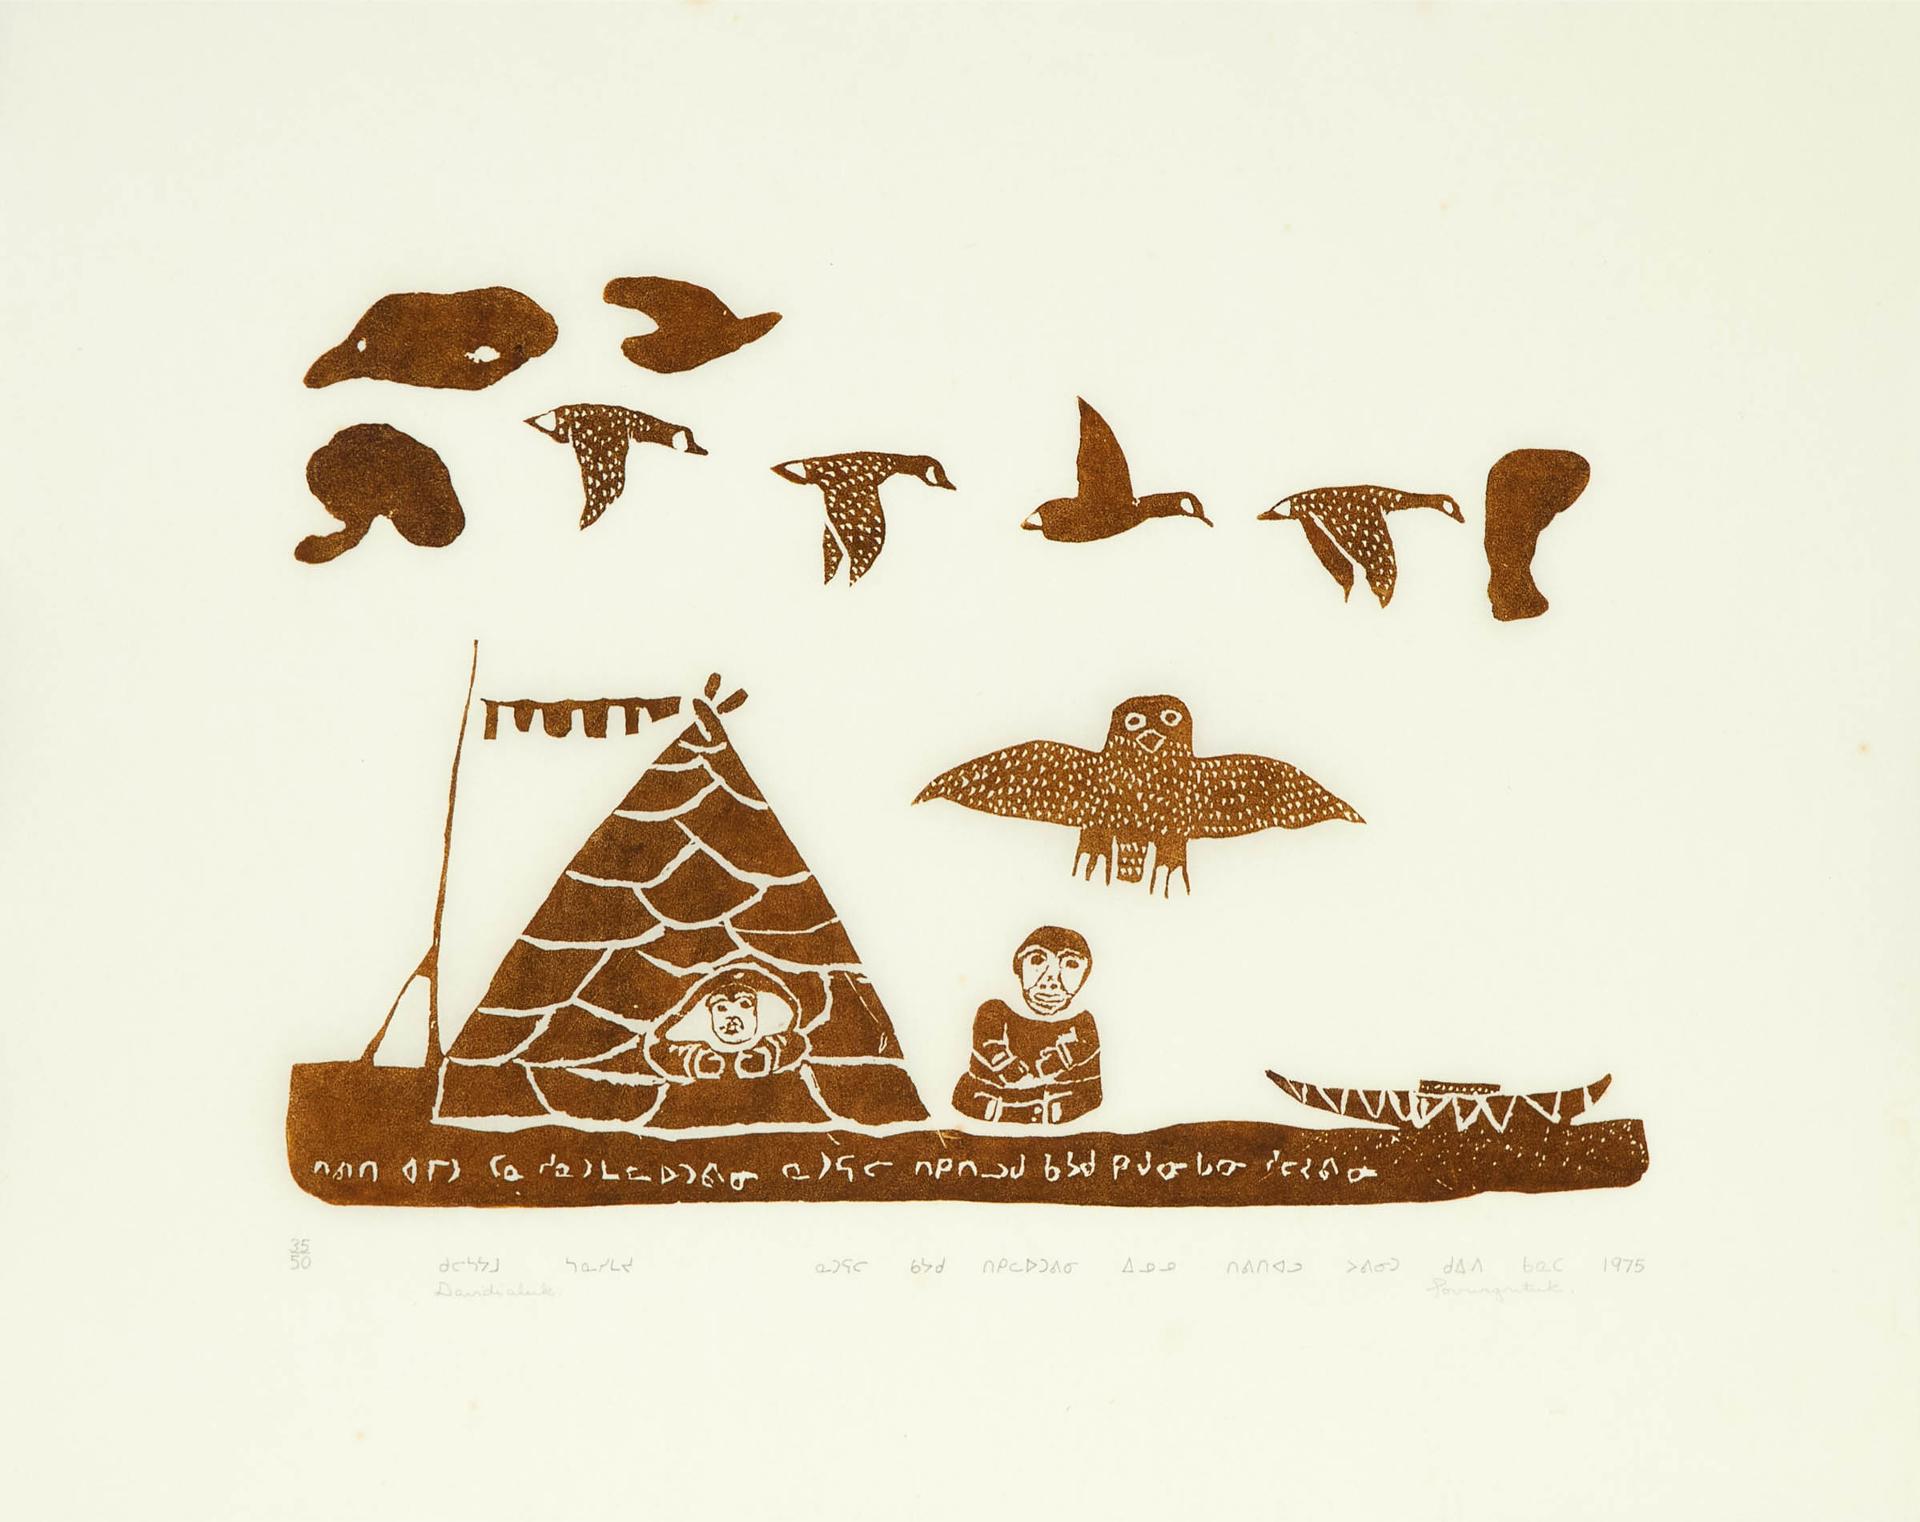 Davidialuk Alasua Amittu (1910-1976) - Hawk Arrives At Camp By Kayak, 1975